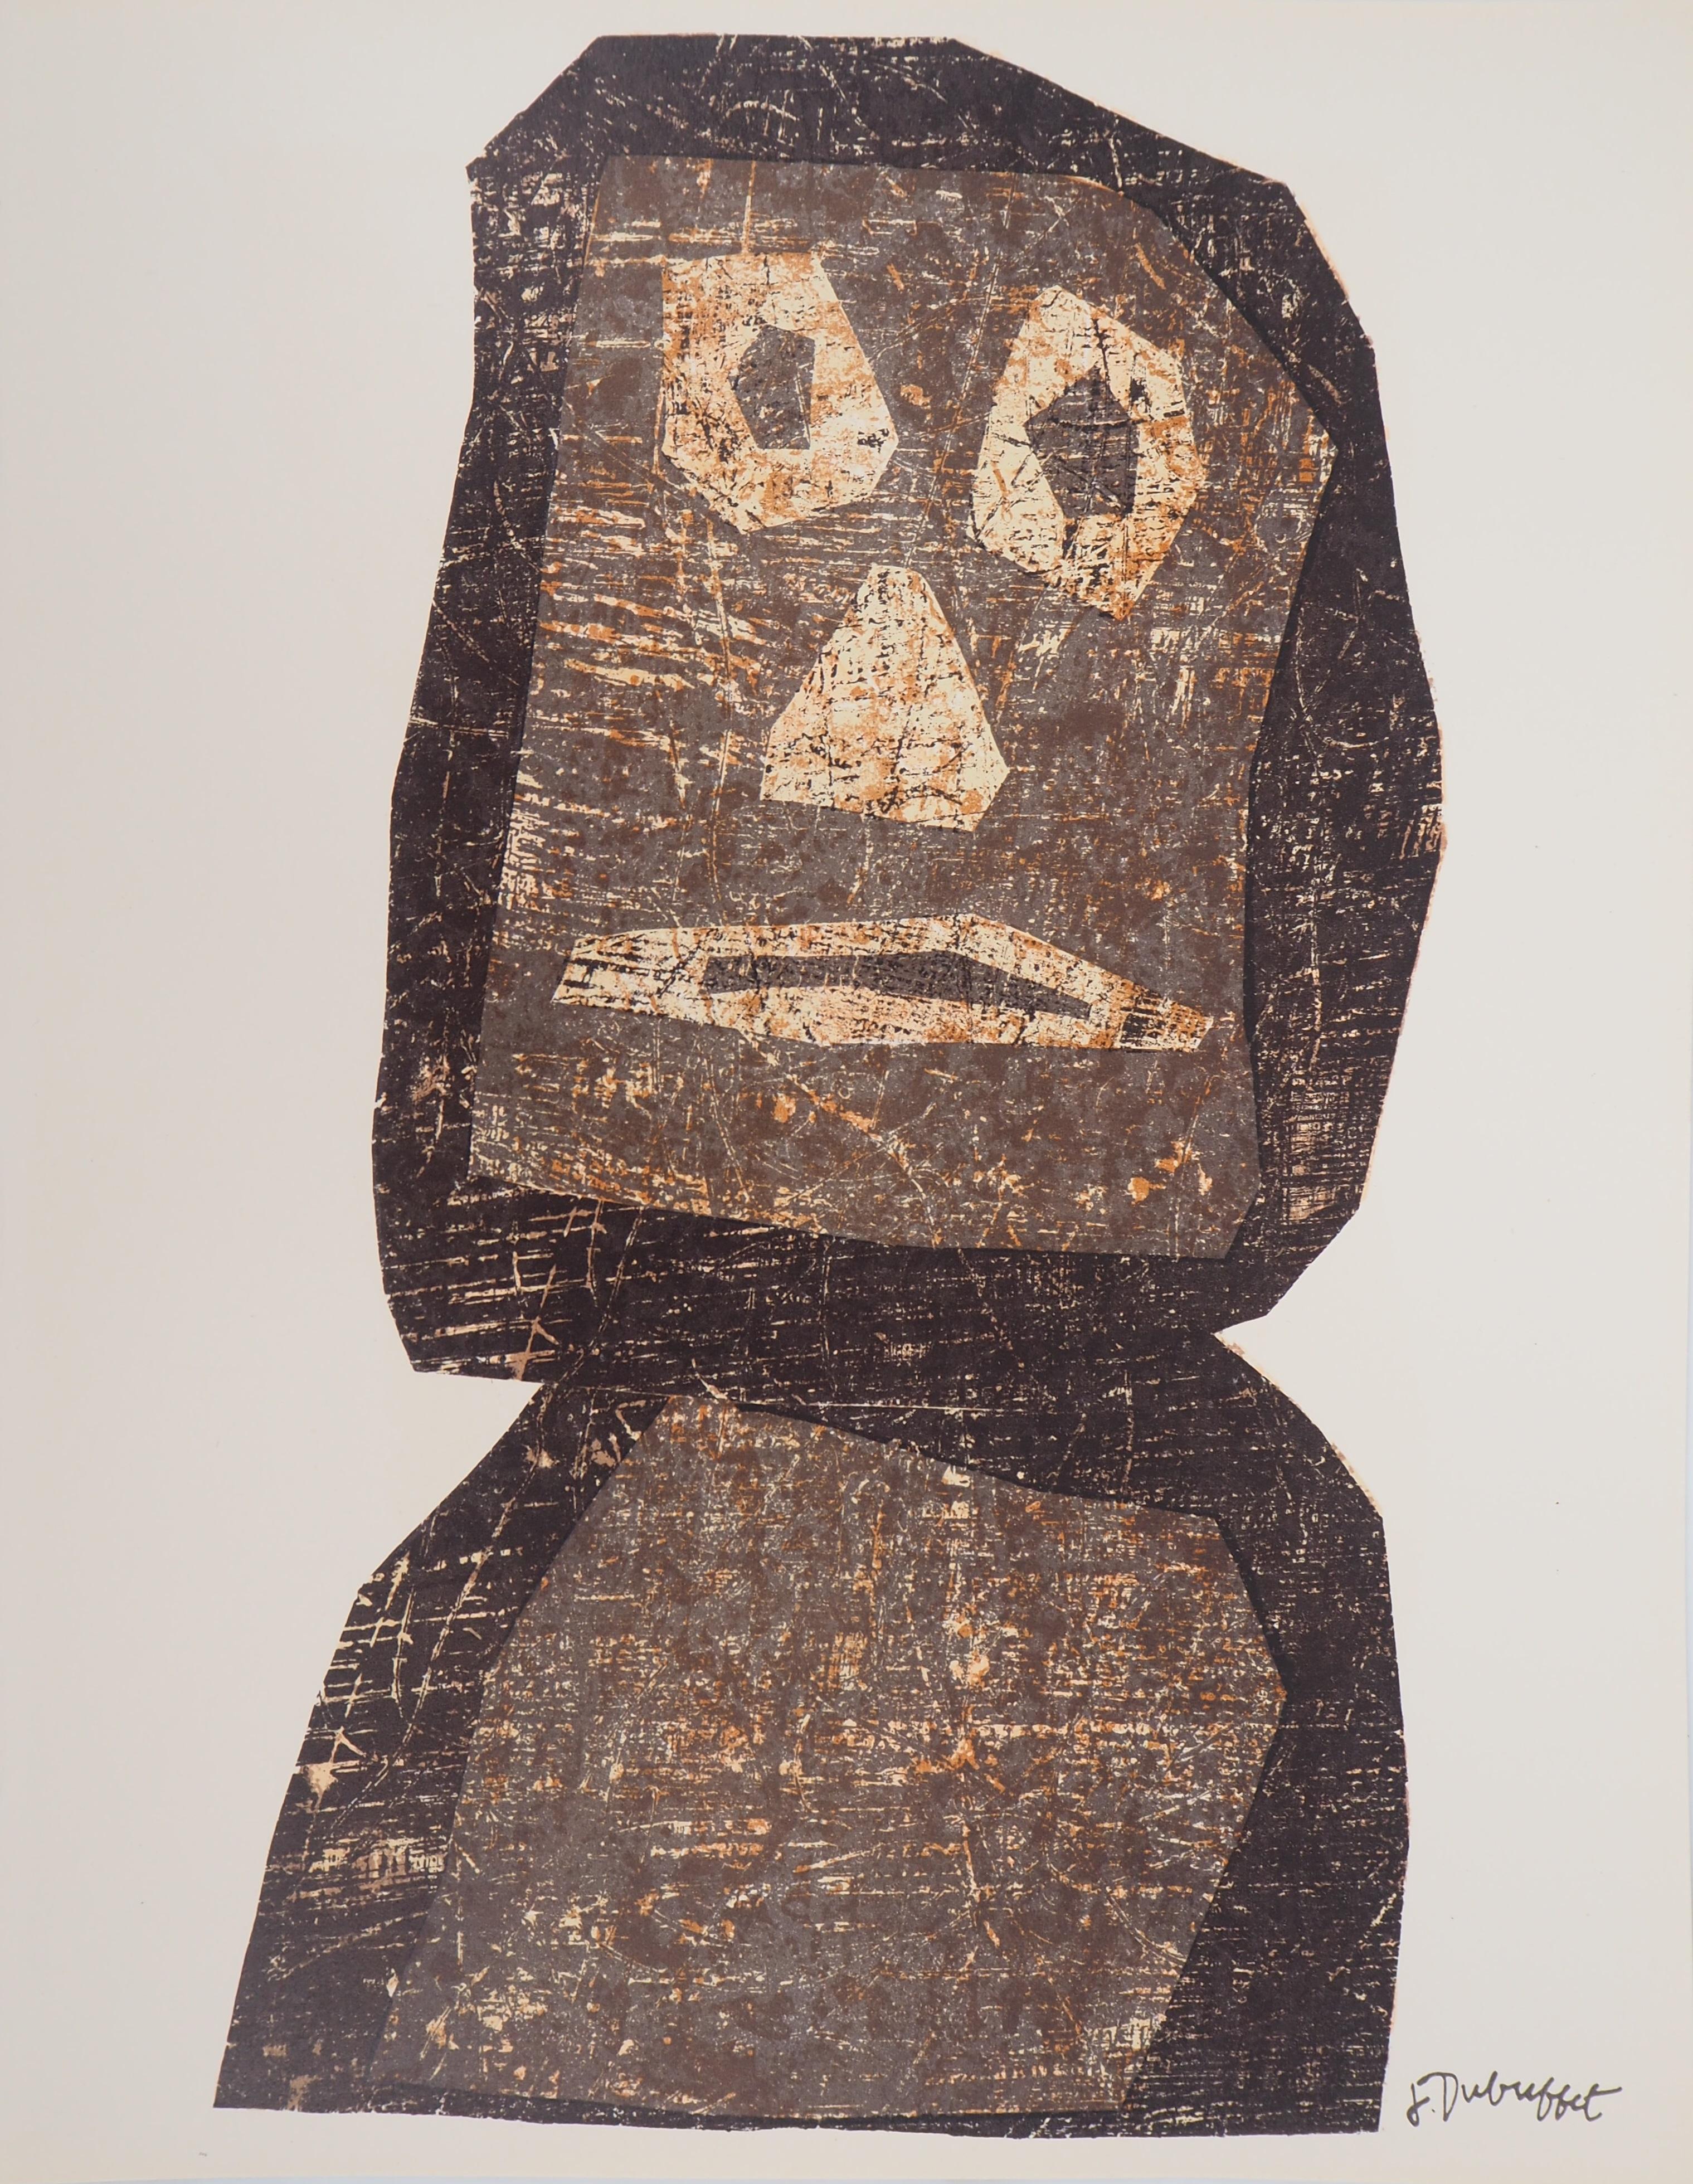 Jean Dubuffet Portrait Print - Totem (Easter Island Moai) - Original lithograph